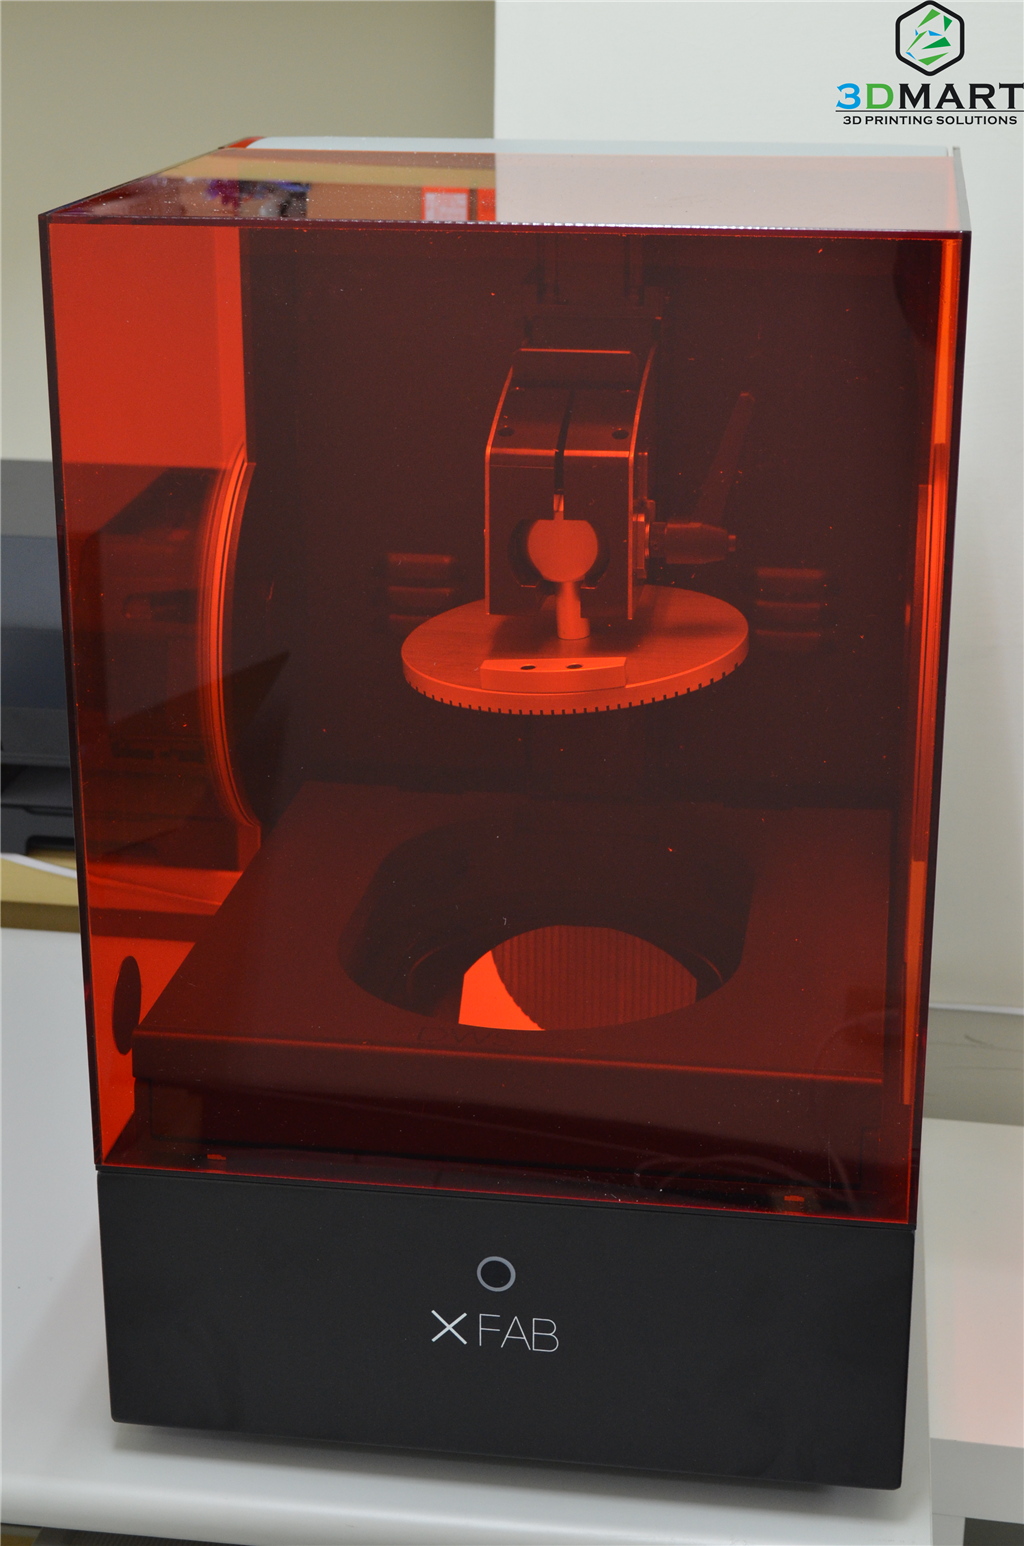 3DMART 引進 DWS 高級桌上型 SLA 光固化 3D列印機  - XFAB在三帝瑪辦公室首次亮相